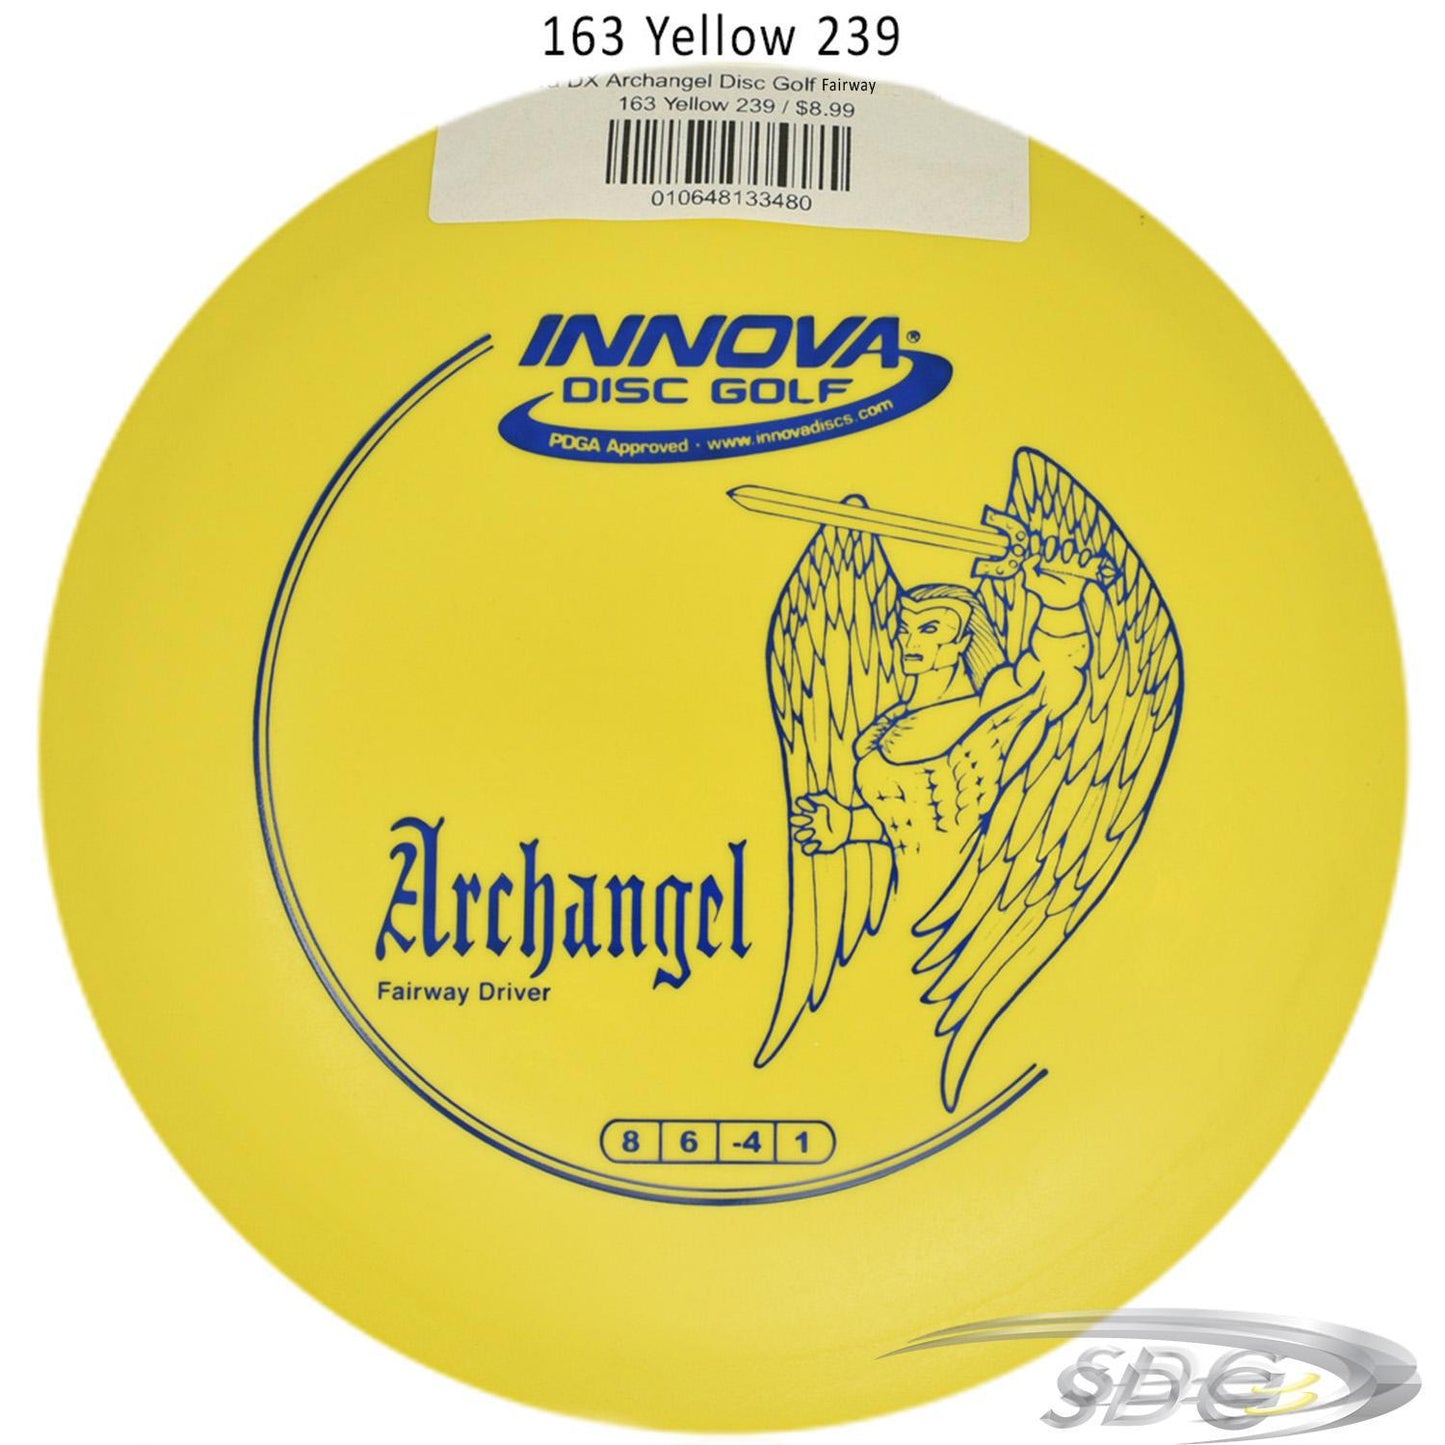 innova-dx-archangel-disc-golf-fairway-driver 163 Yellow 239 